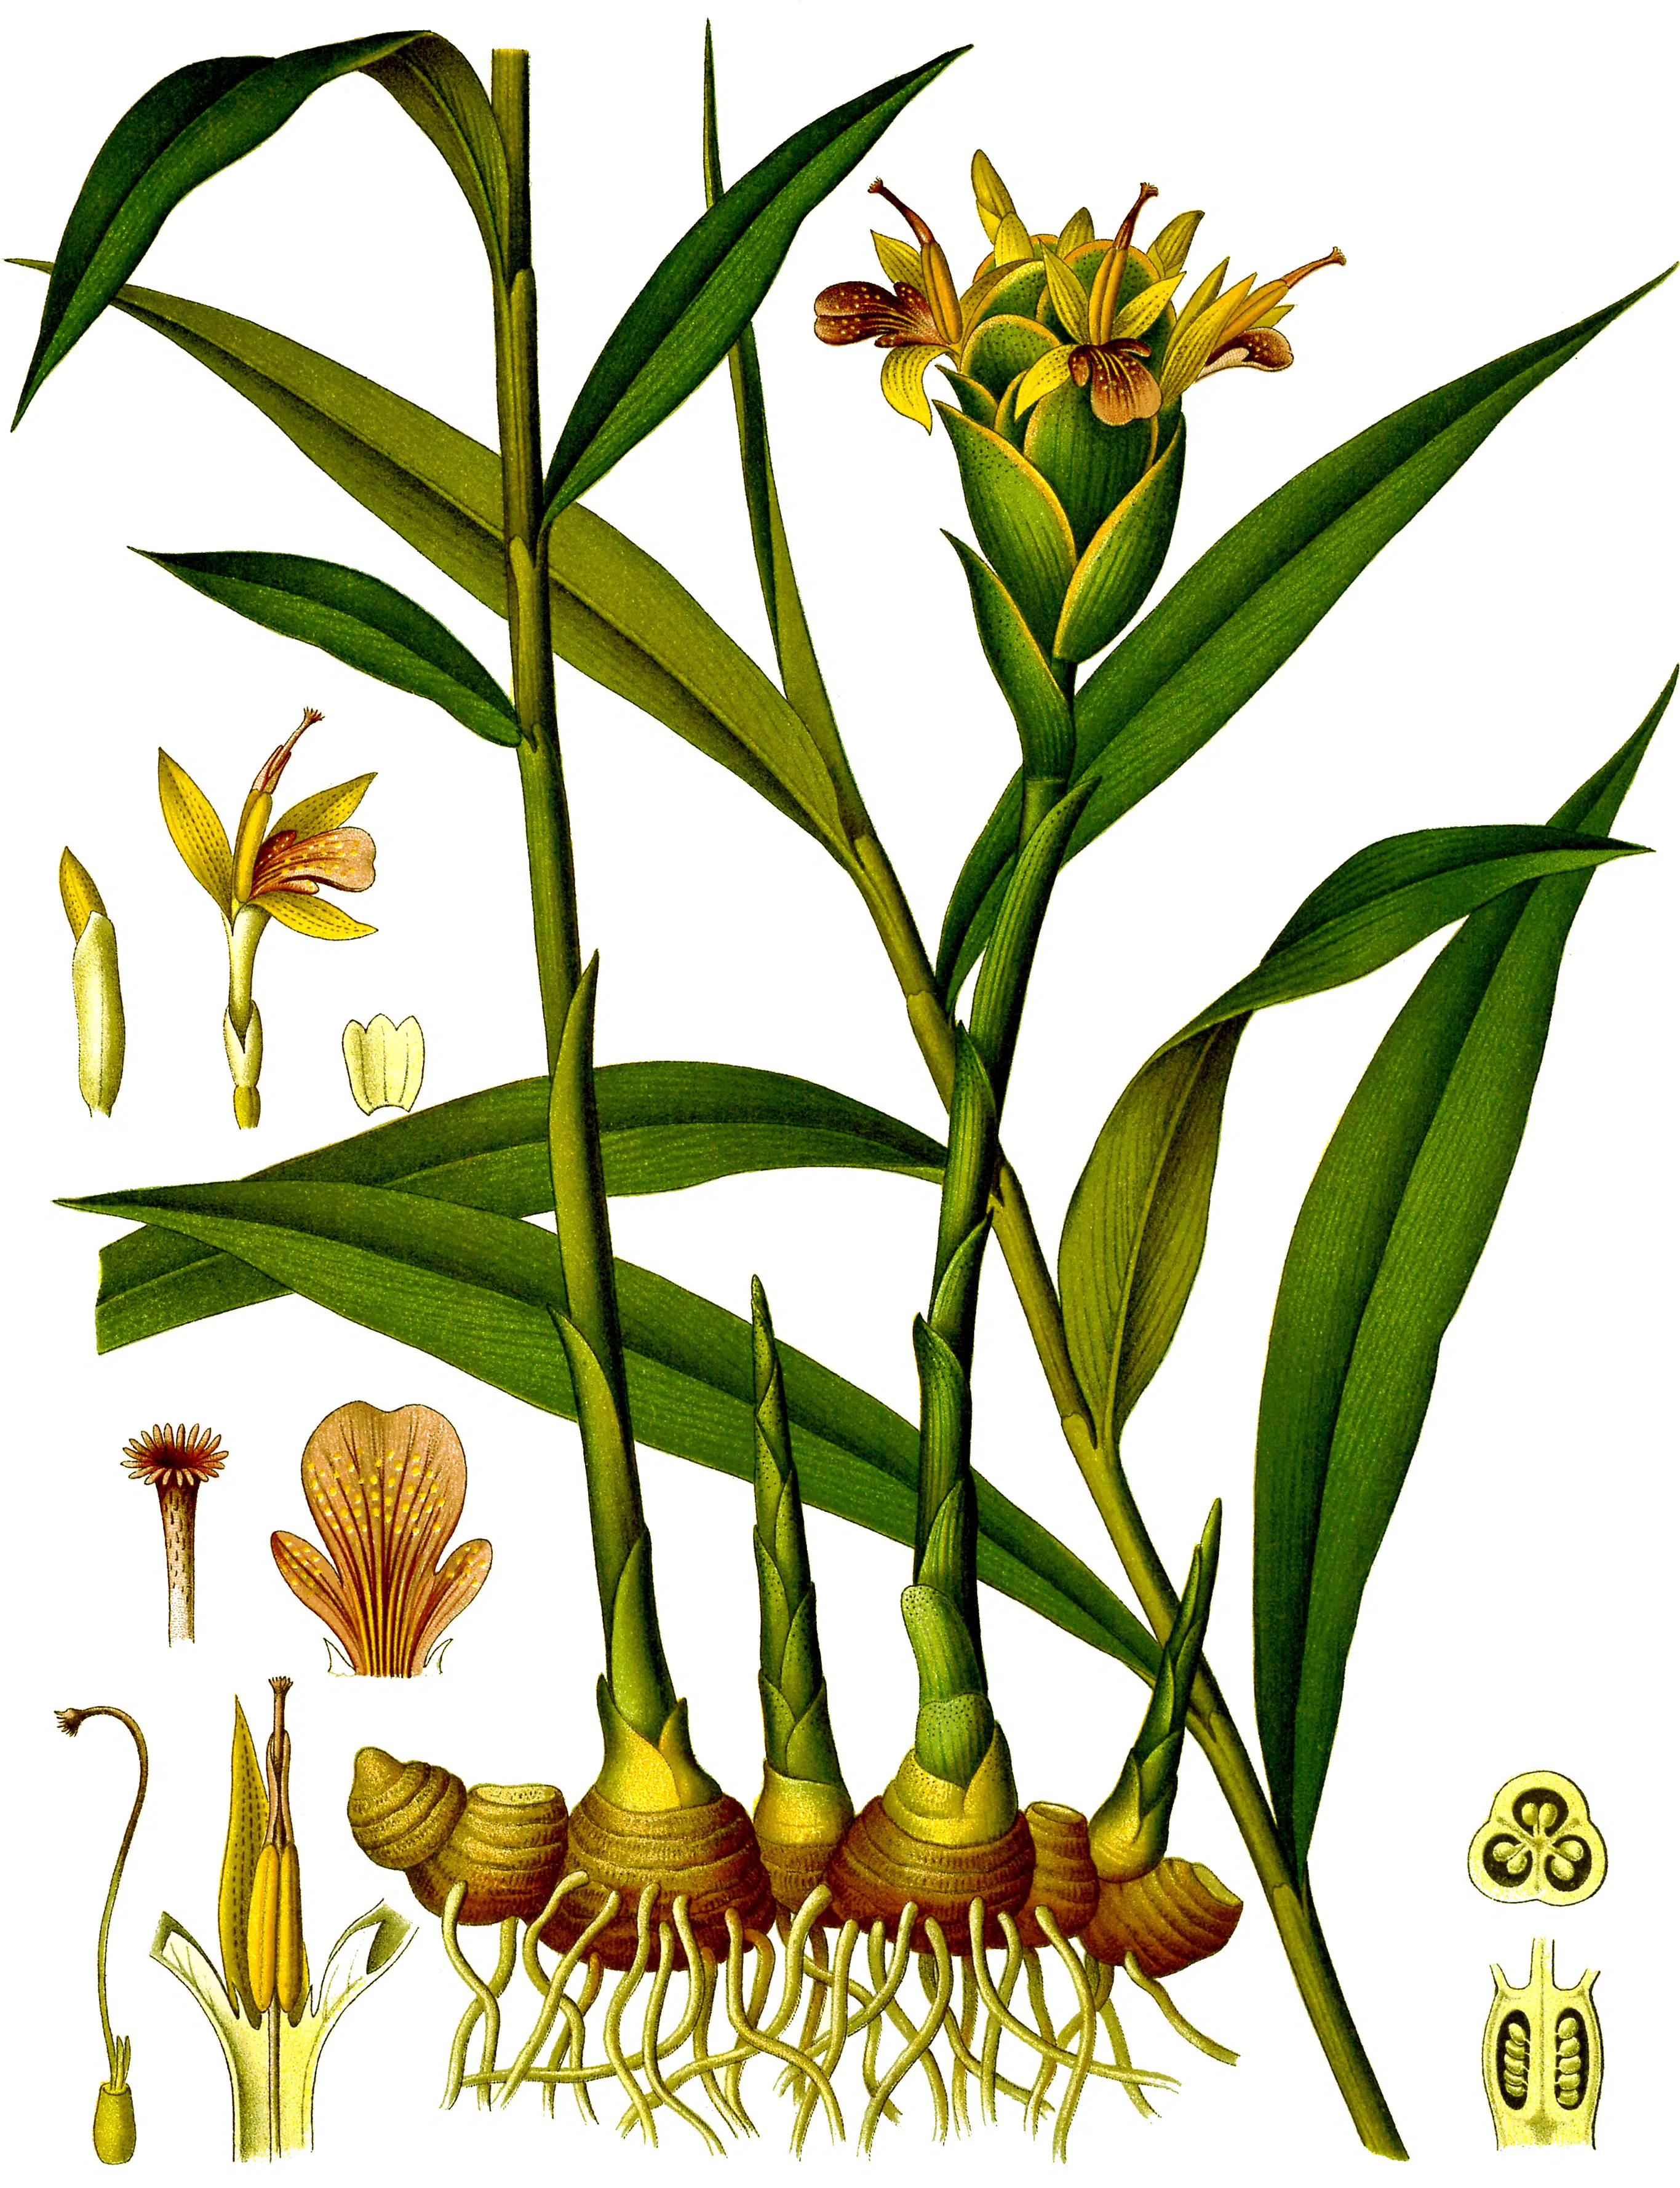 Gemberplant (Zingiber officinale)